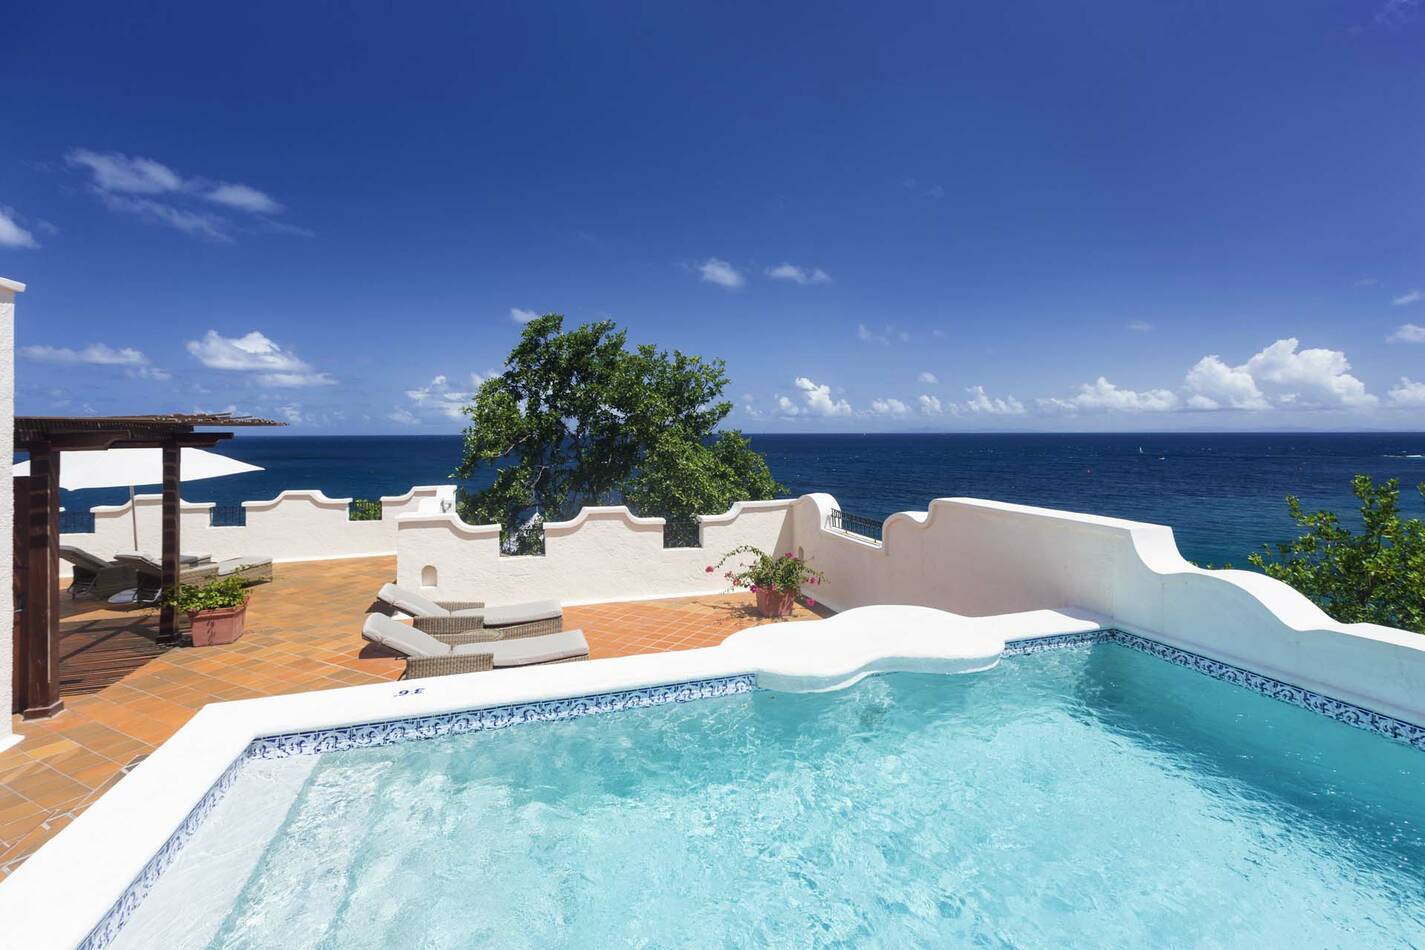 Cap Maison Ocean View Villa Suite Piscine Terrasse Sainte Lucie